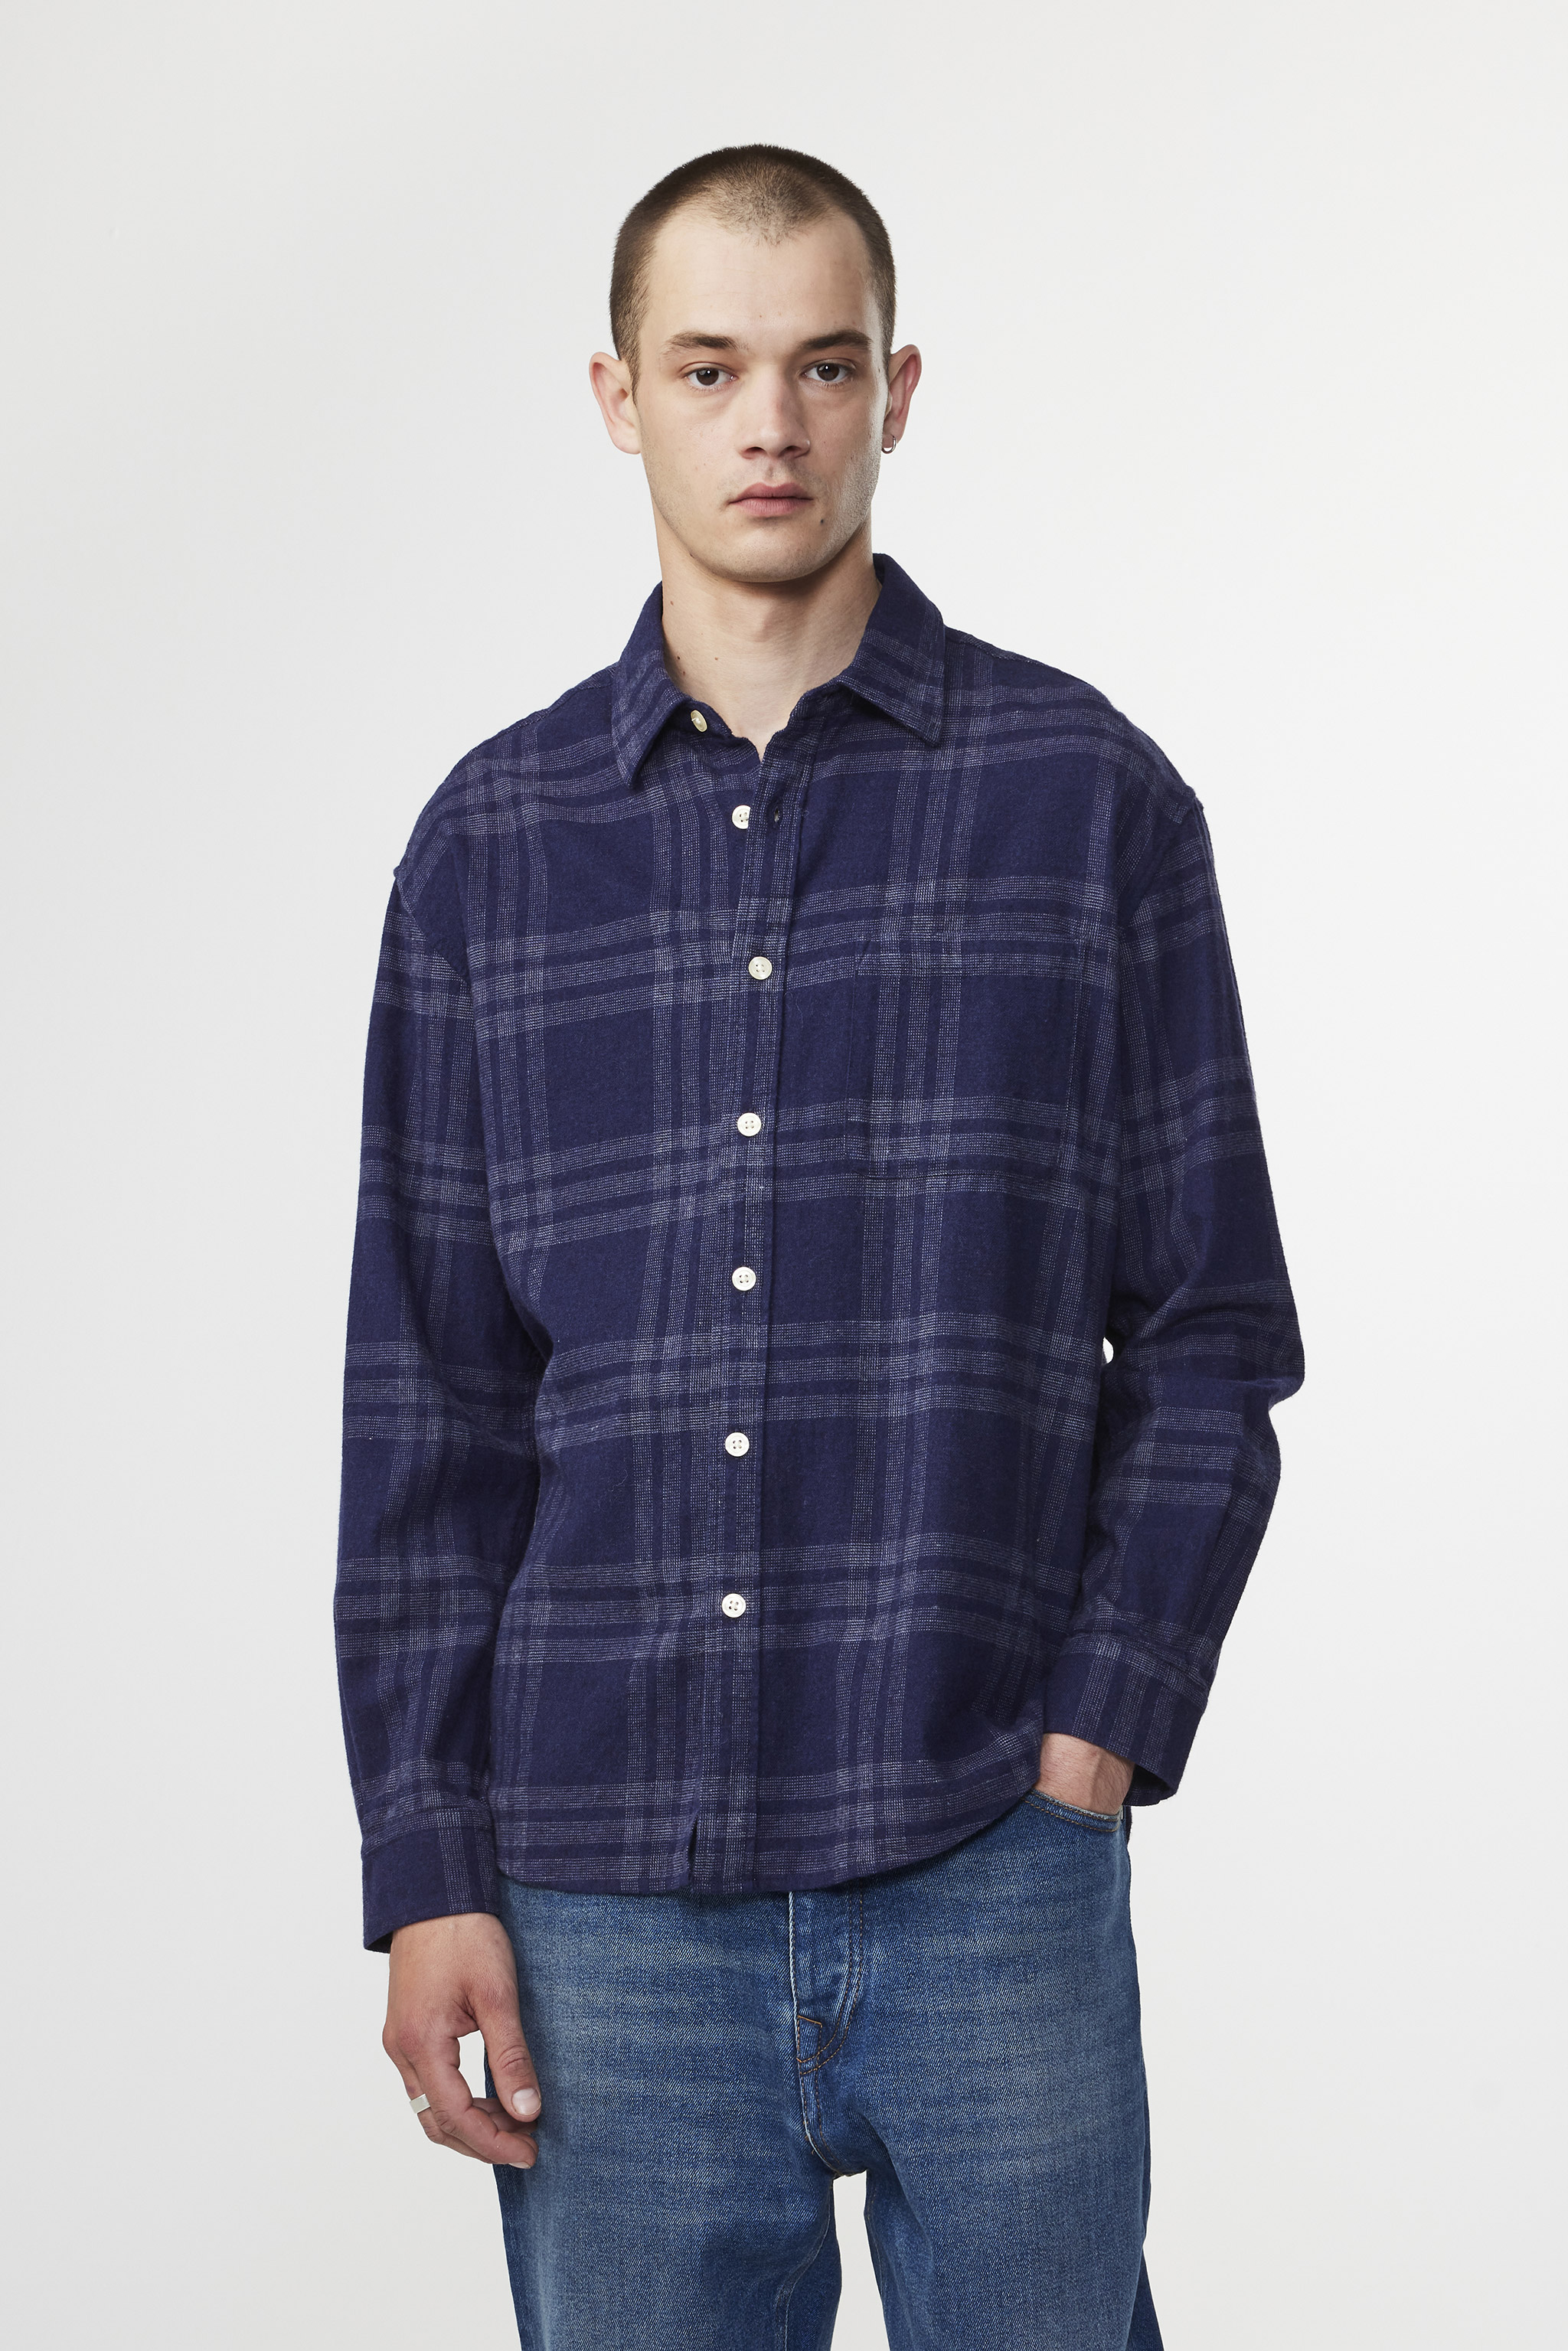 Deon 5465 men's shirt - Blue Check - Buy online at